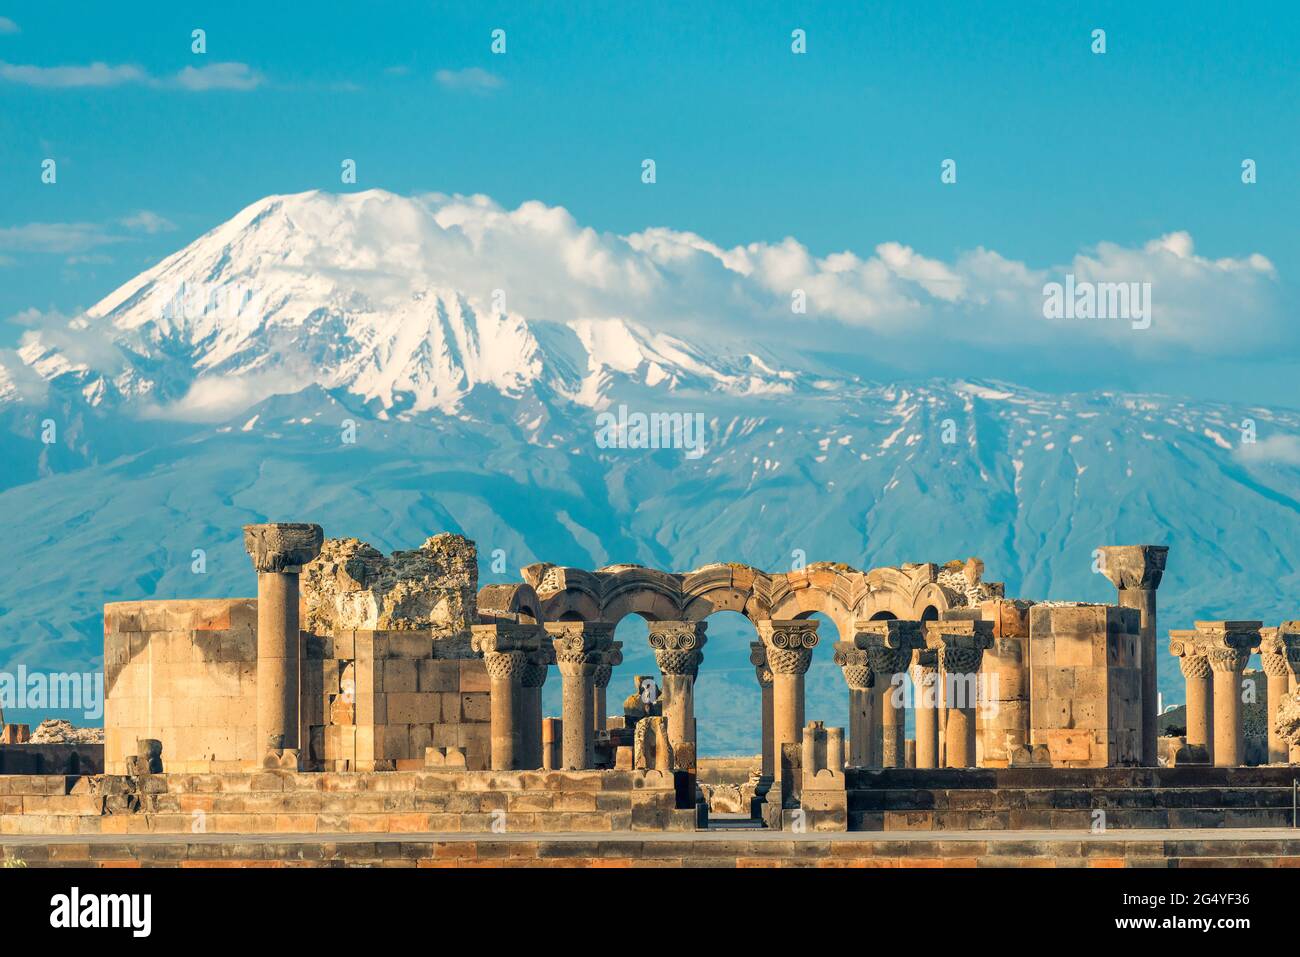 Mount Ararat and view of the ruins of Zvartnots temple, Armenia Stock Photo